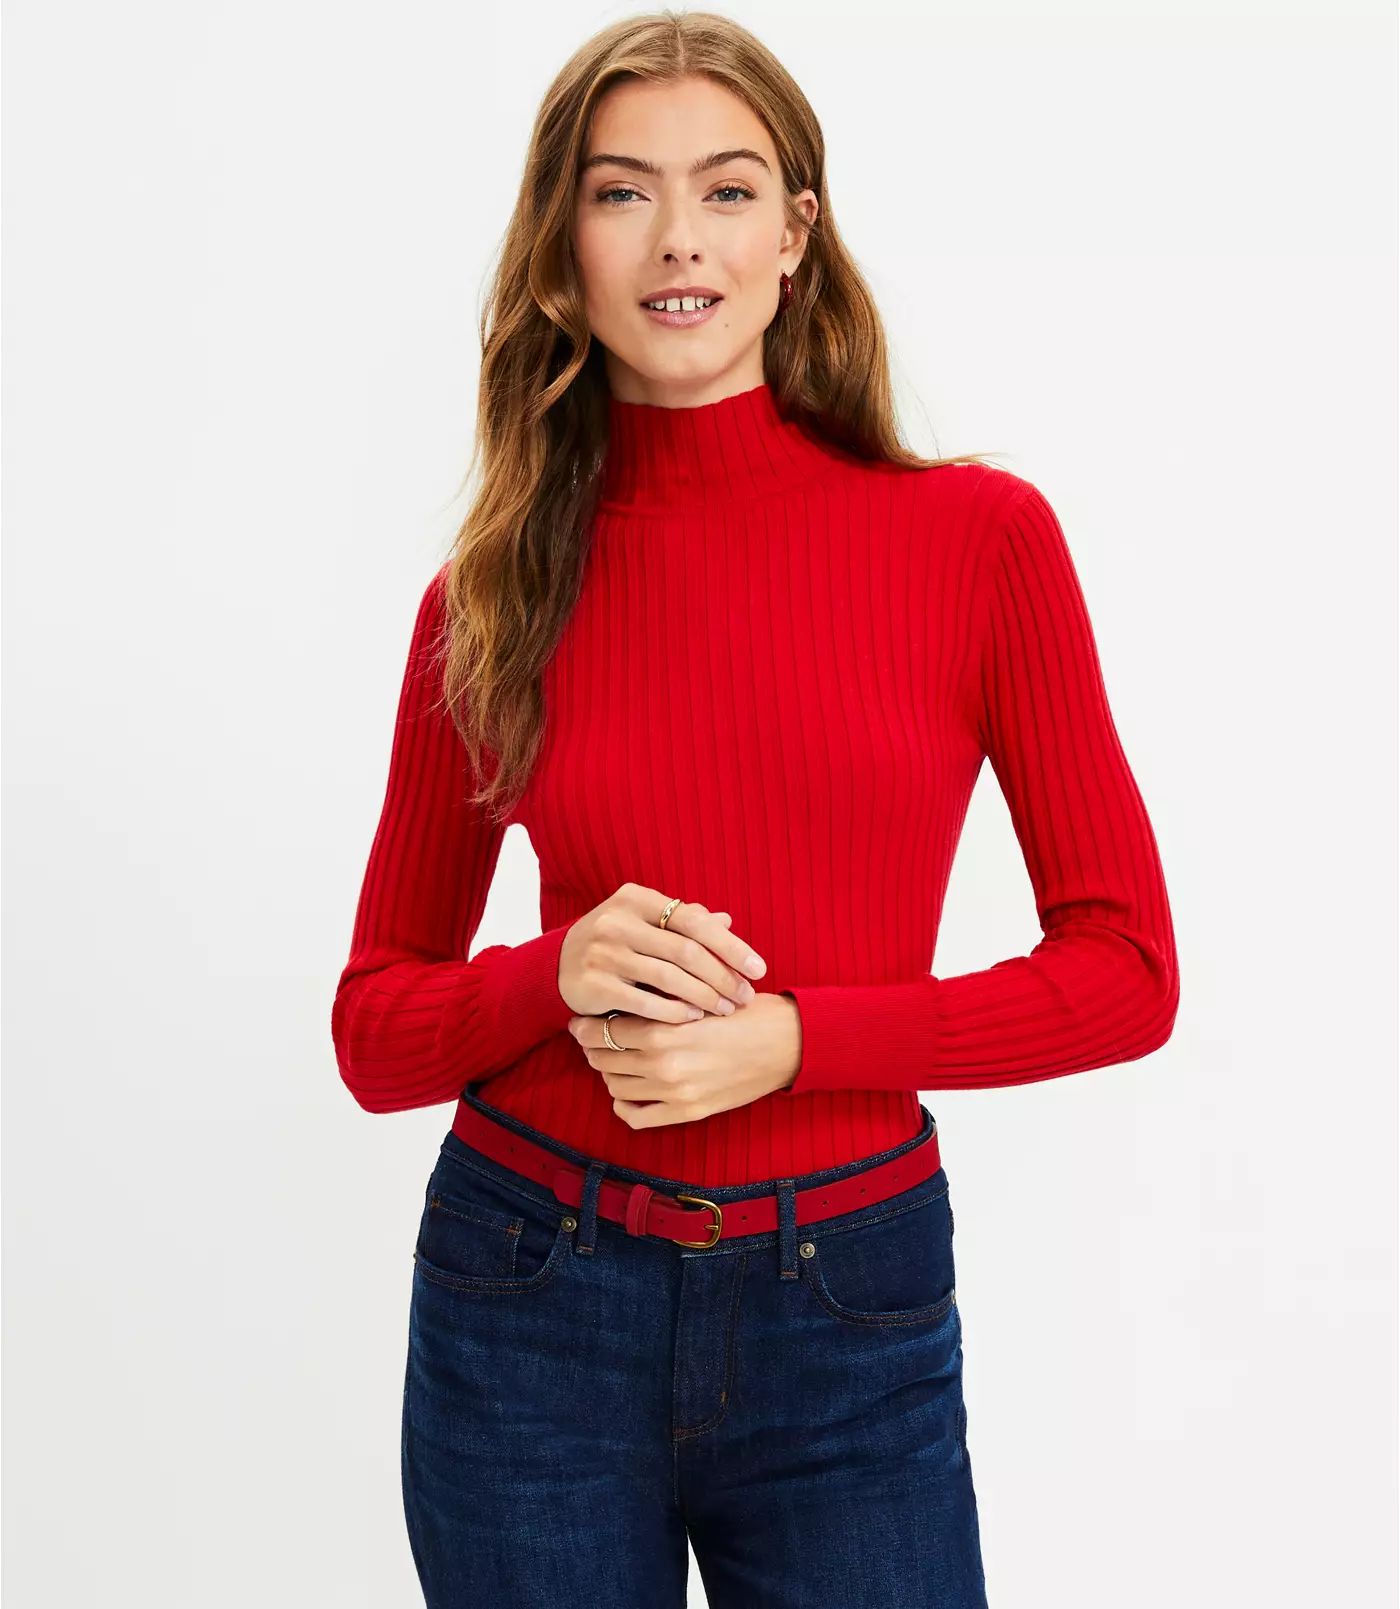 Ribbed Turtleneck Sweater | LOFT